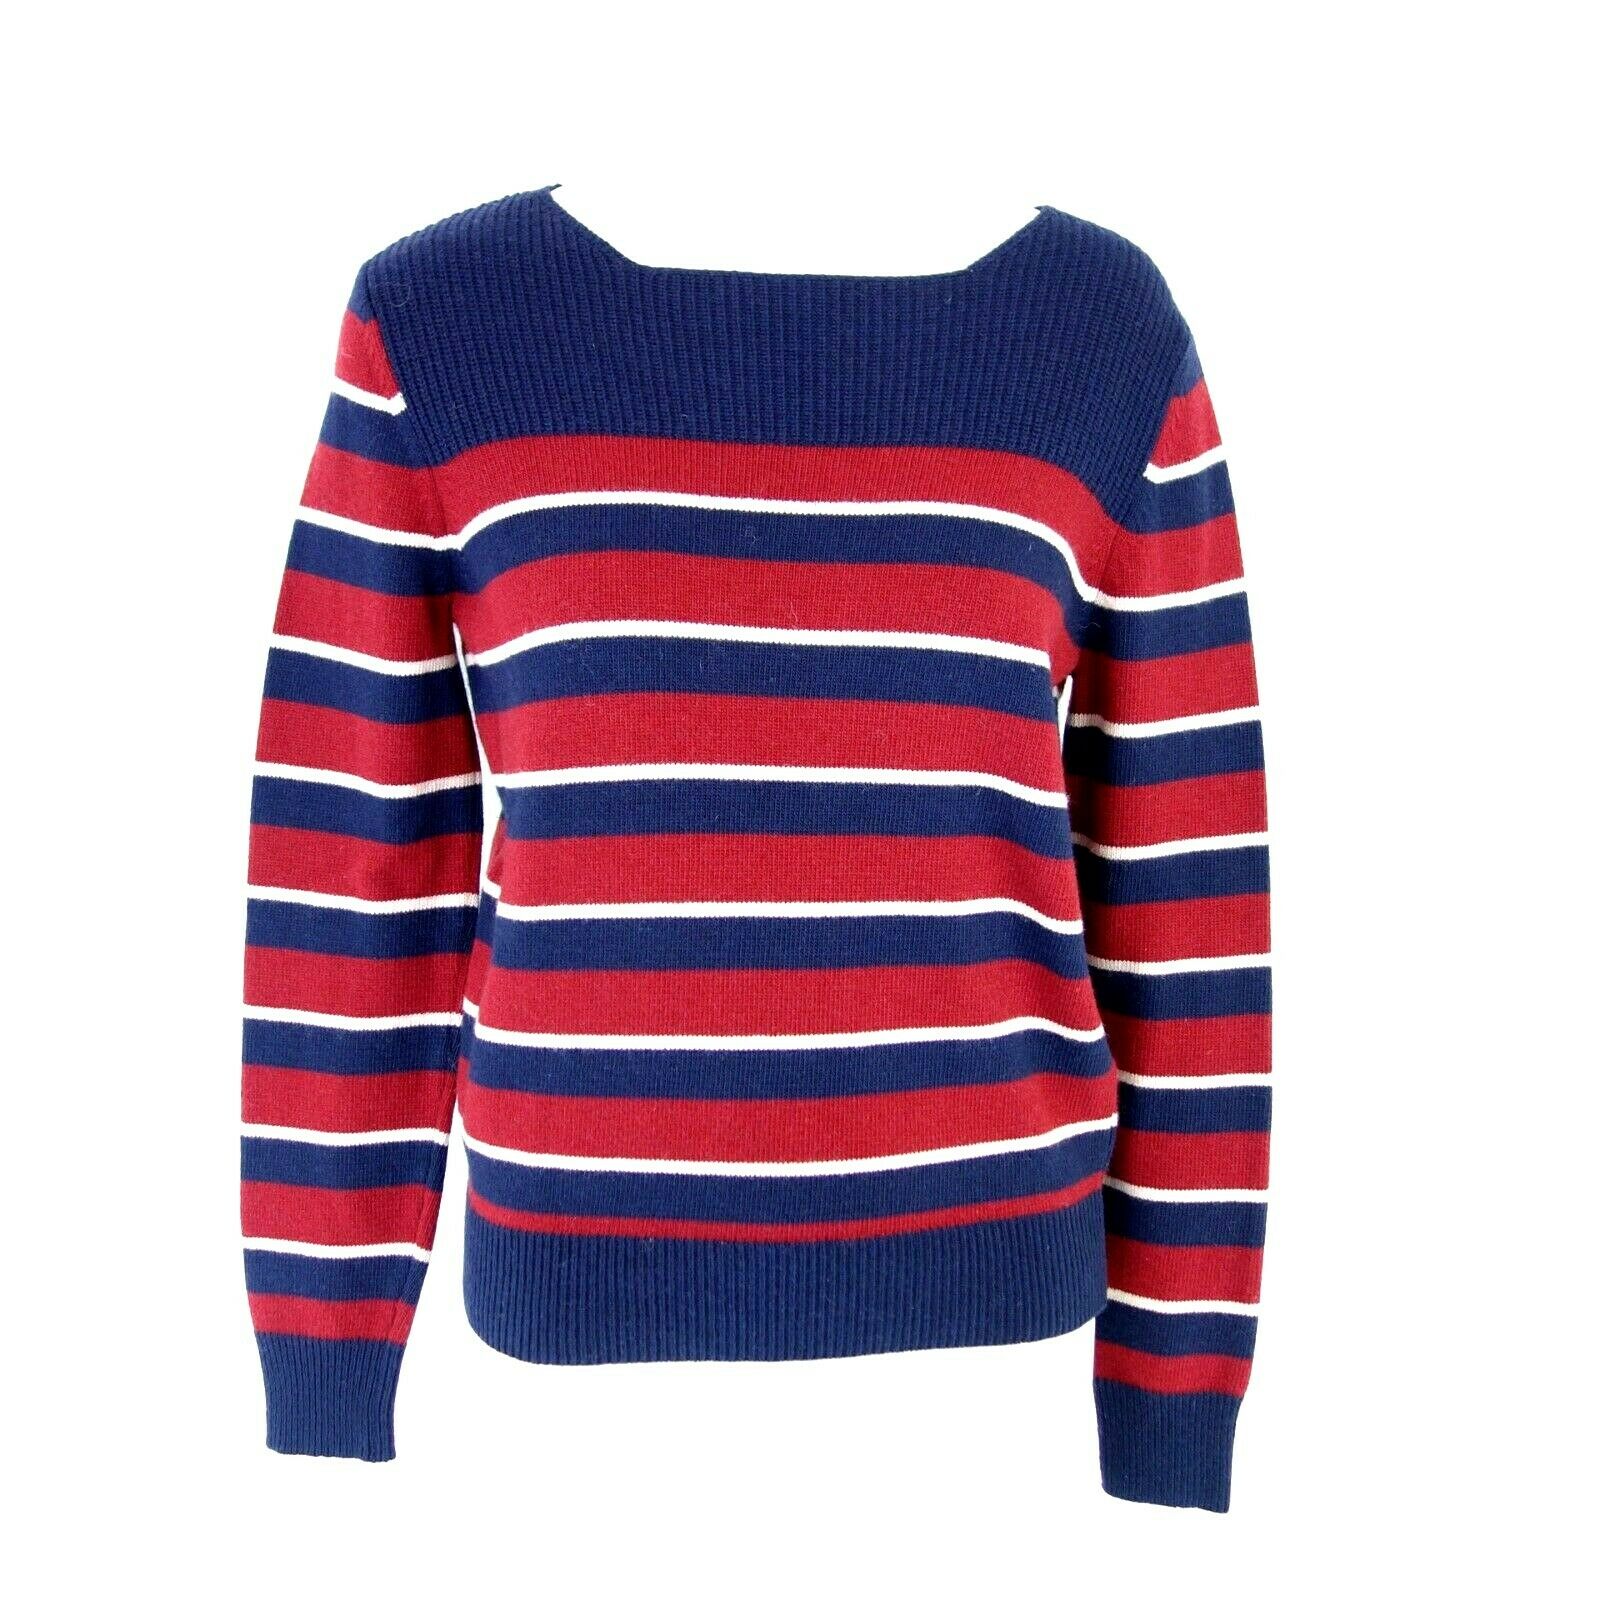 Set Damen Pullover Sweater Svea Größe XS 34 M 38 Blau Rot Weiß Knit Np 149 Neu - 38